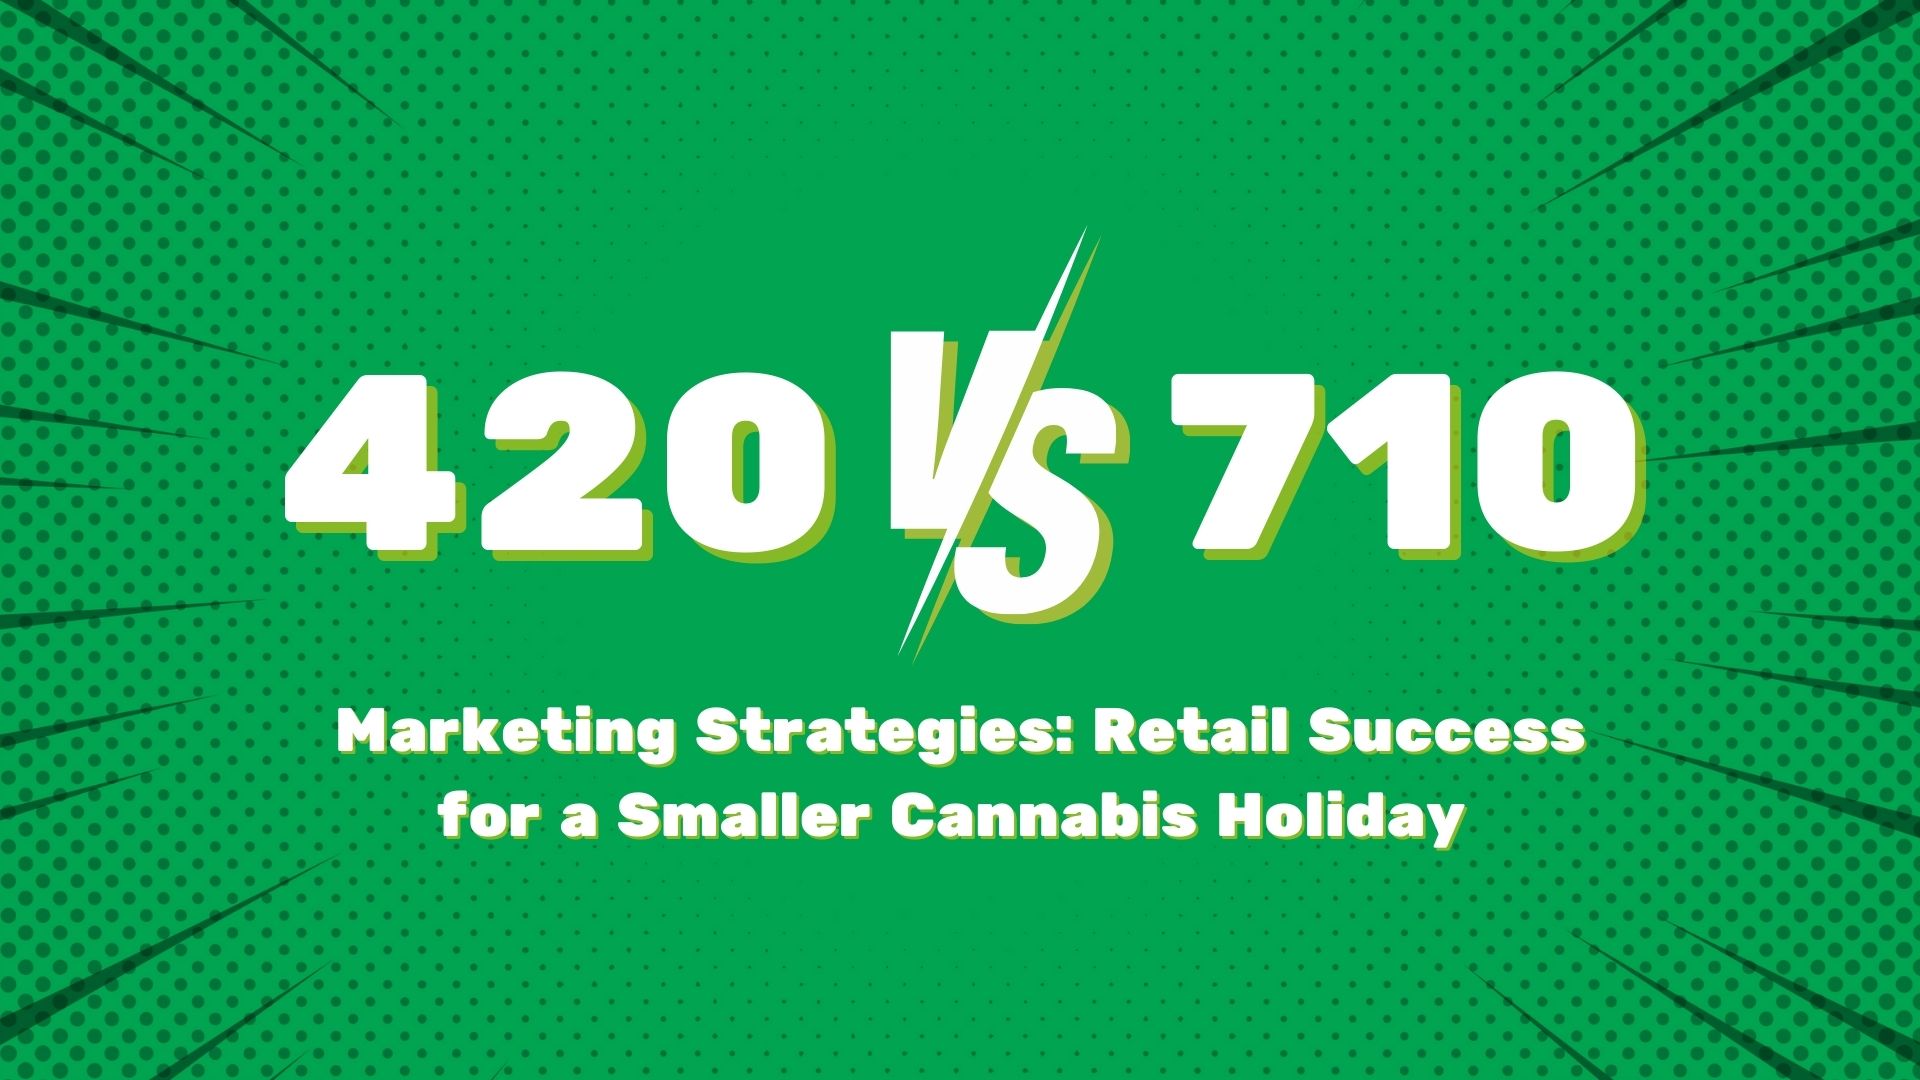 710 marketing strategies